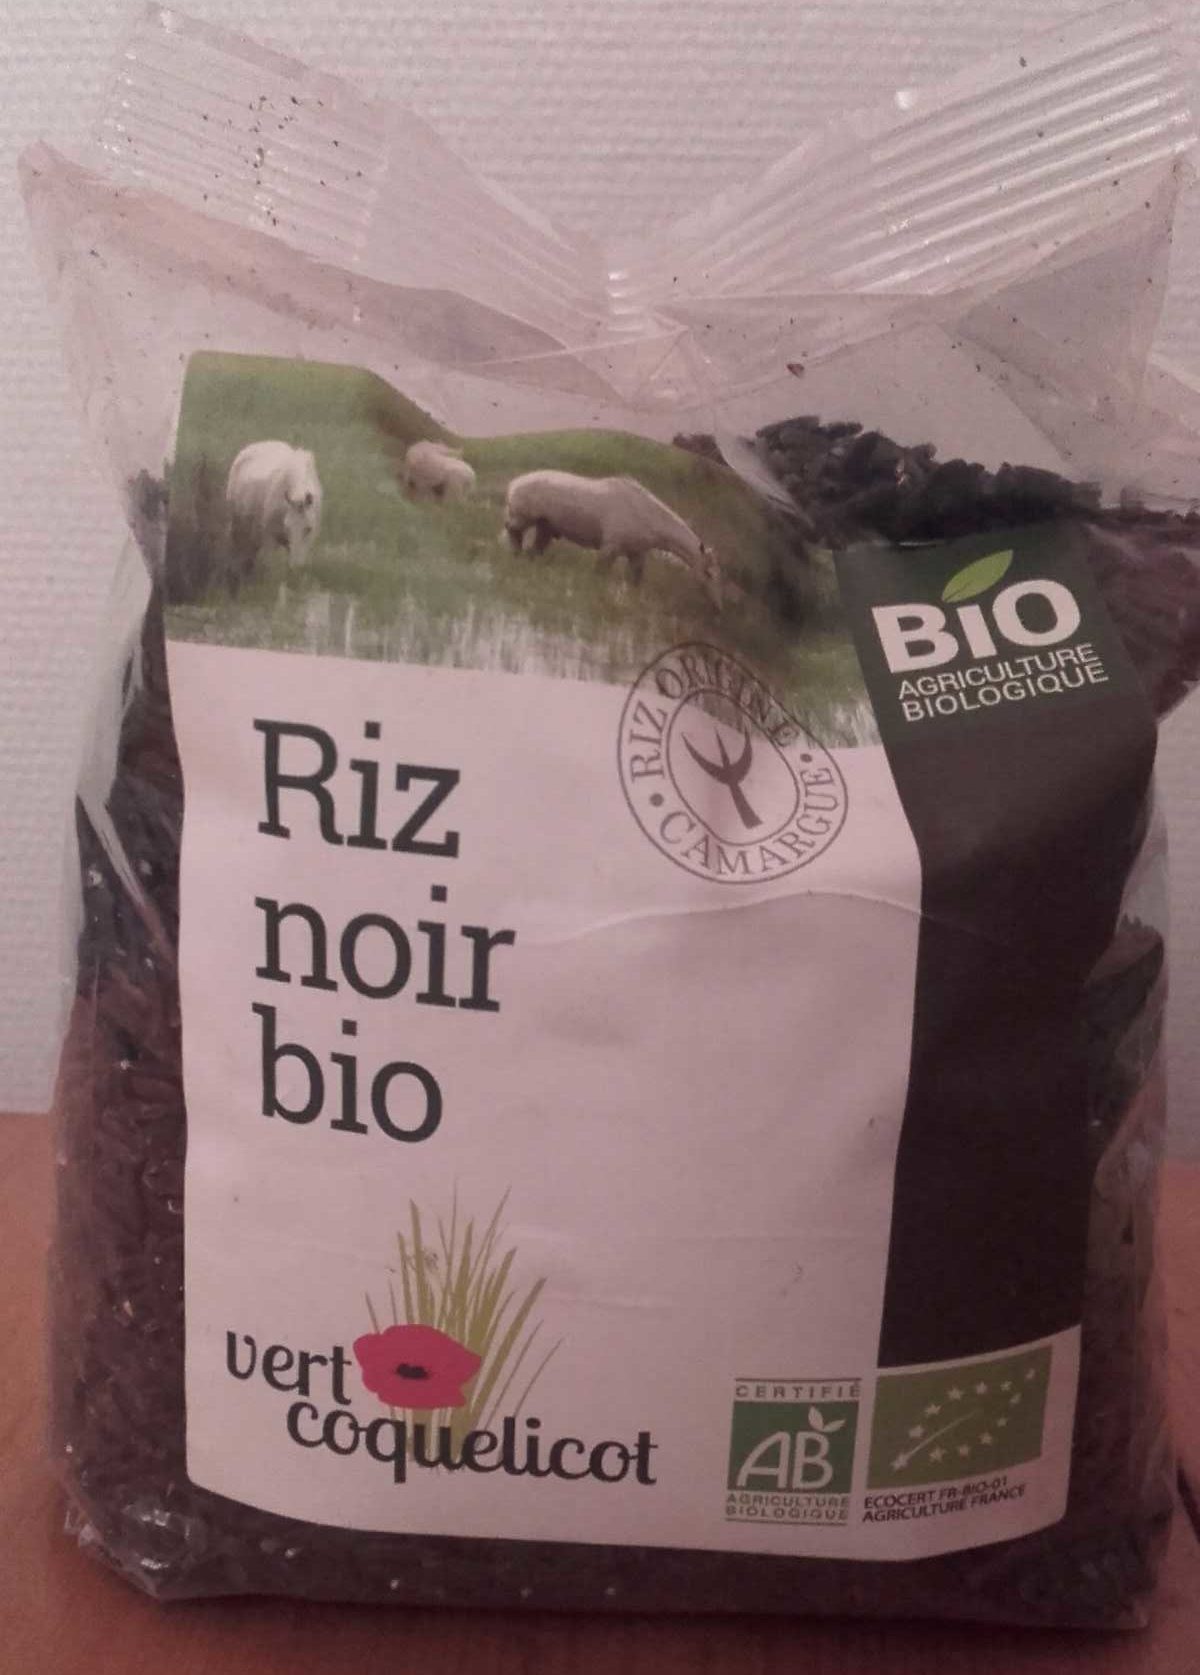 Riz noir bio - Product - fr